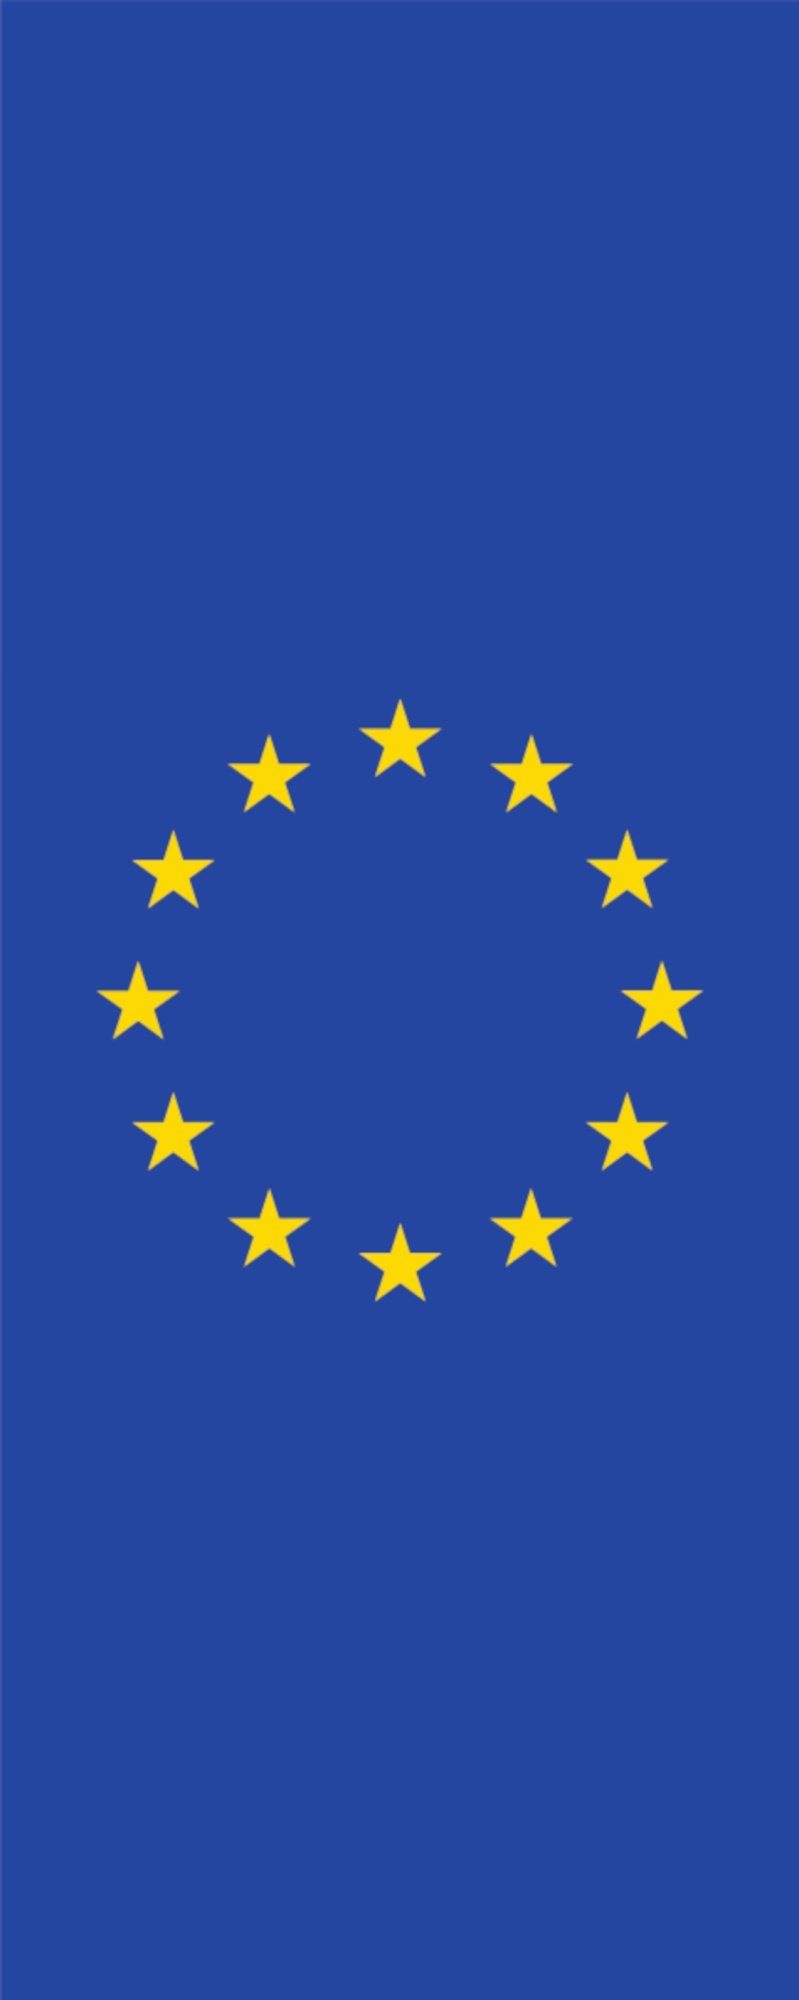 120 Europa Flagge Hochformat g/m² flaggenmeer